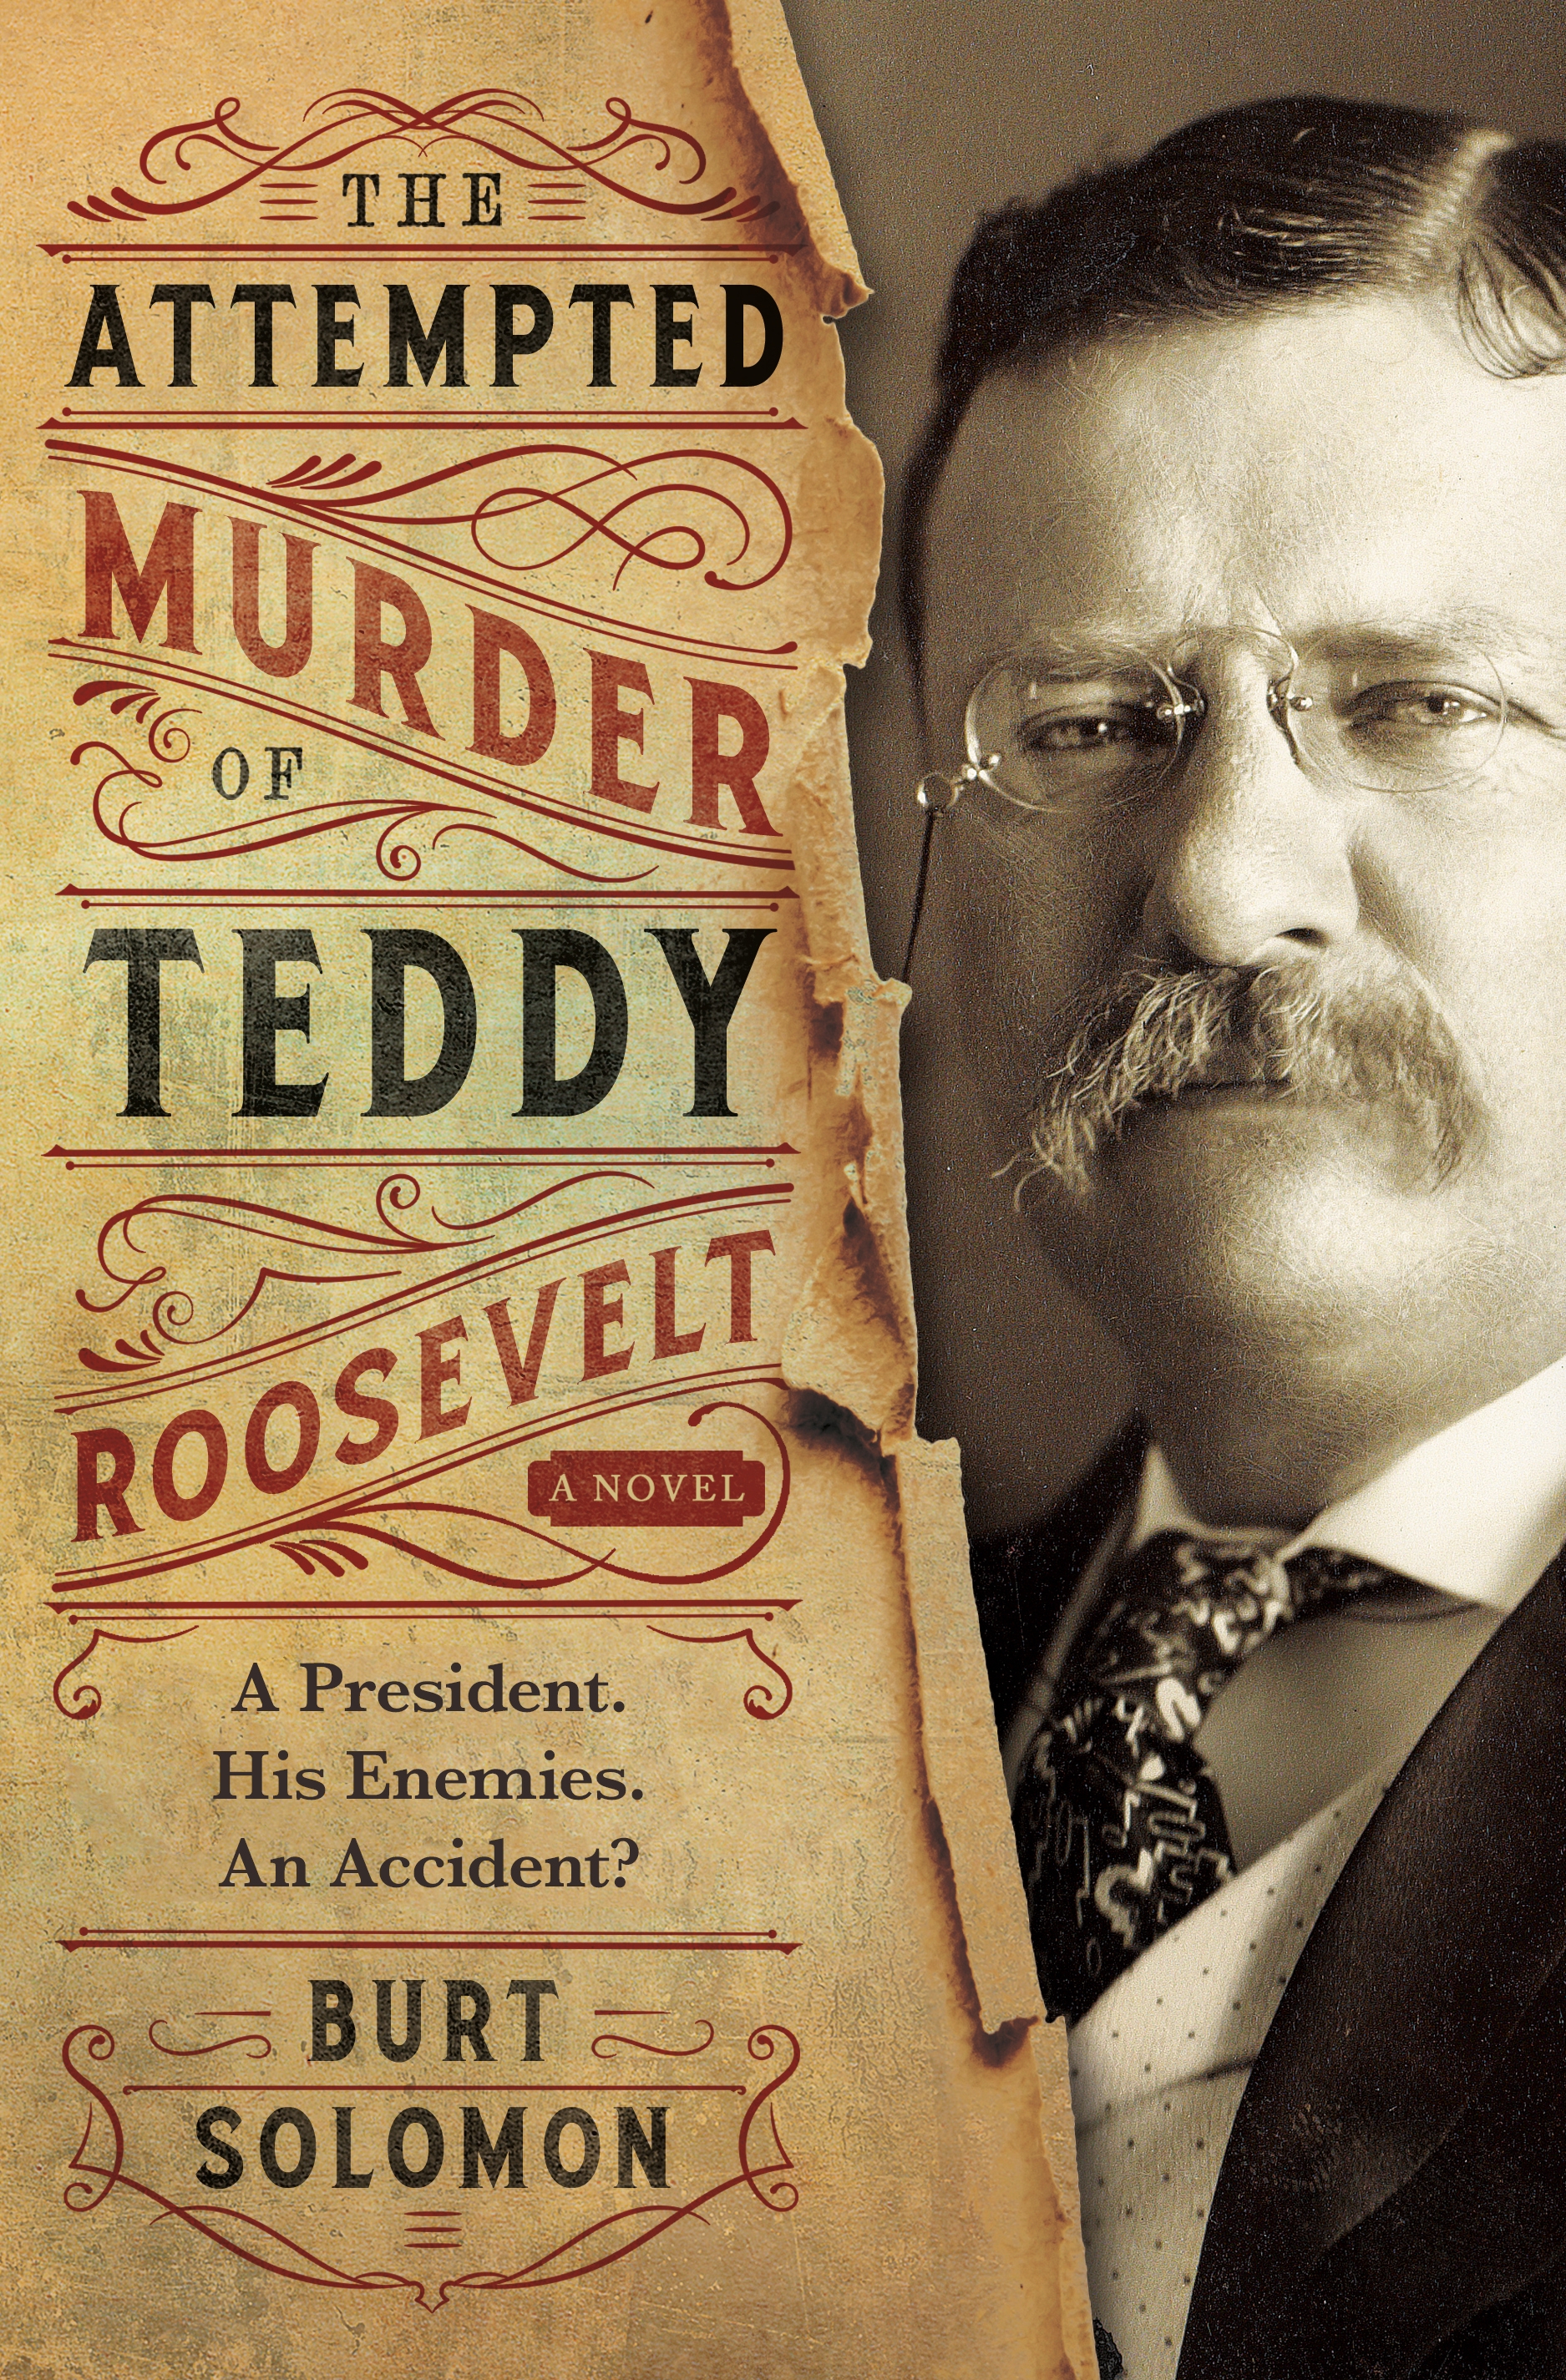 The Attempted Murder of Teddy Roosevelt by Burt Solomon